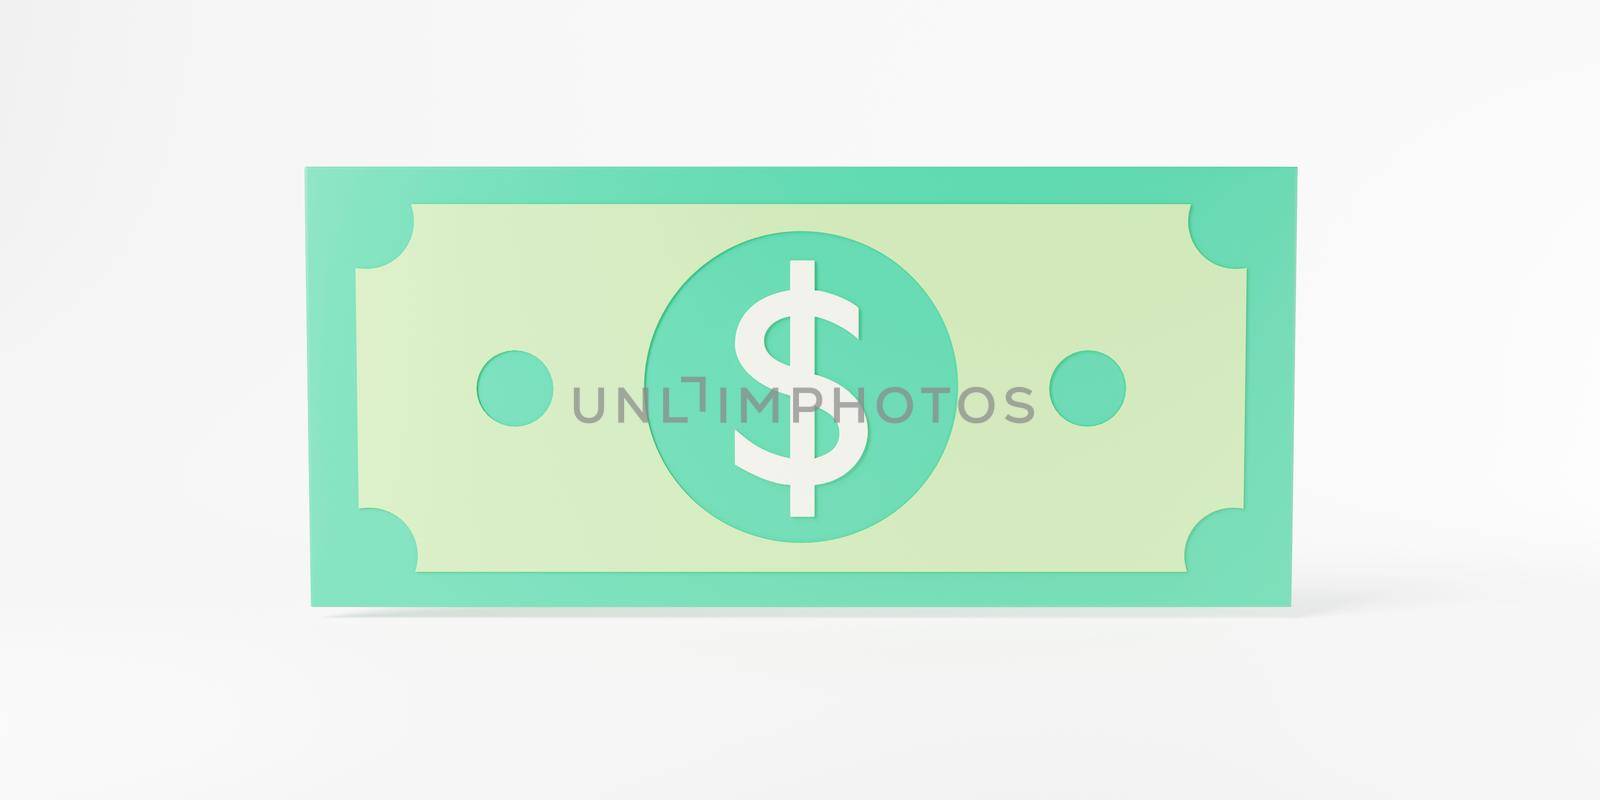 Dollar currency banknote green, cash money bills icon by Sorapop